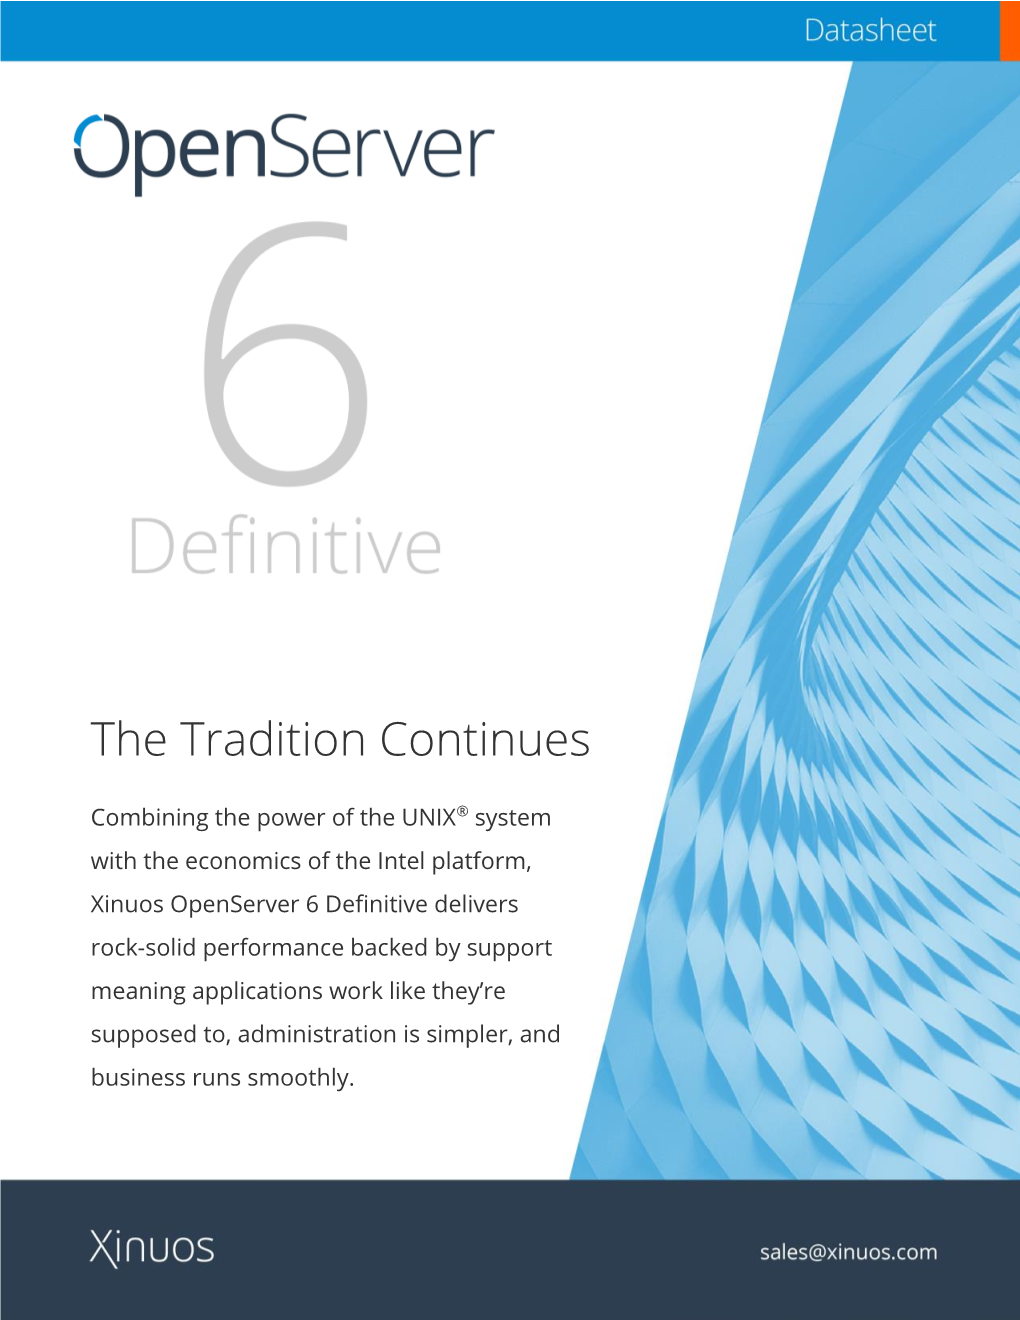 SCO Openserver 6 Definitive 2018